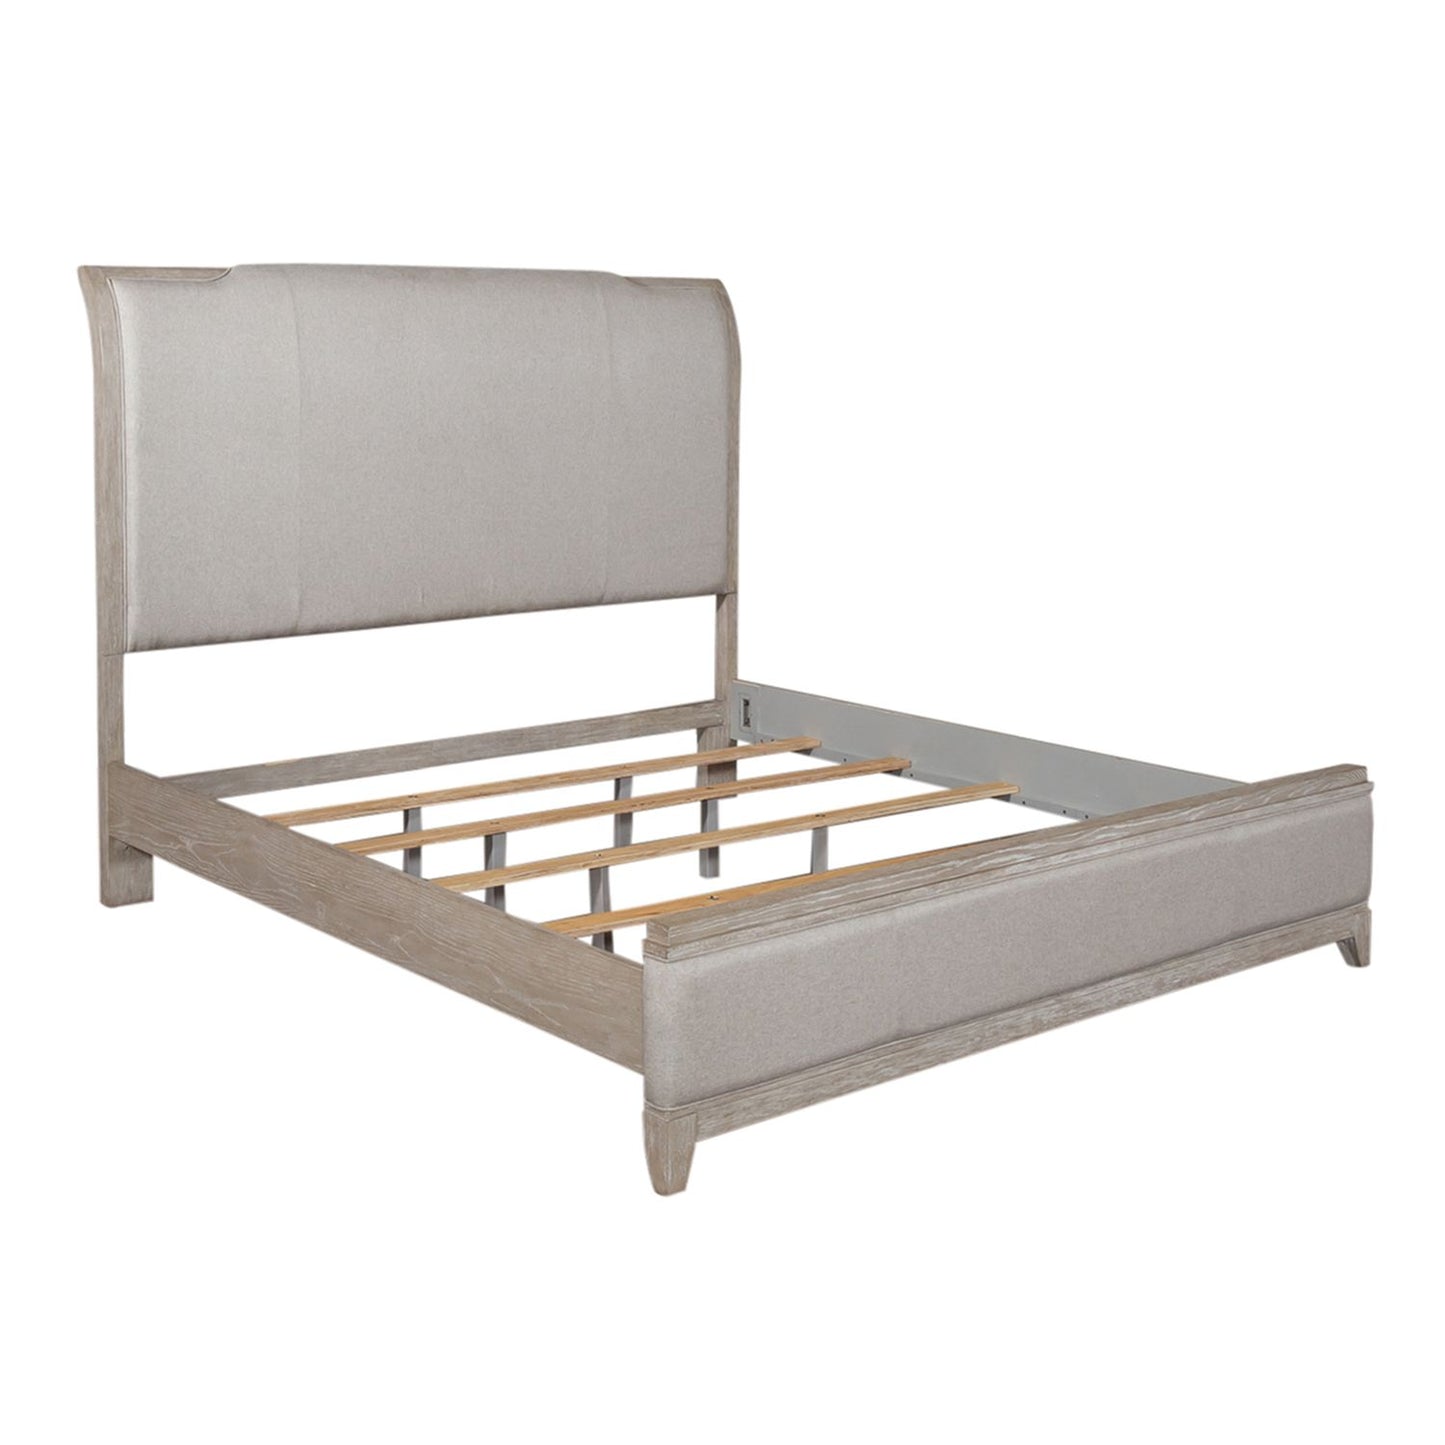 Belmar - King California Upholstered Bed